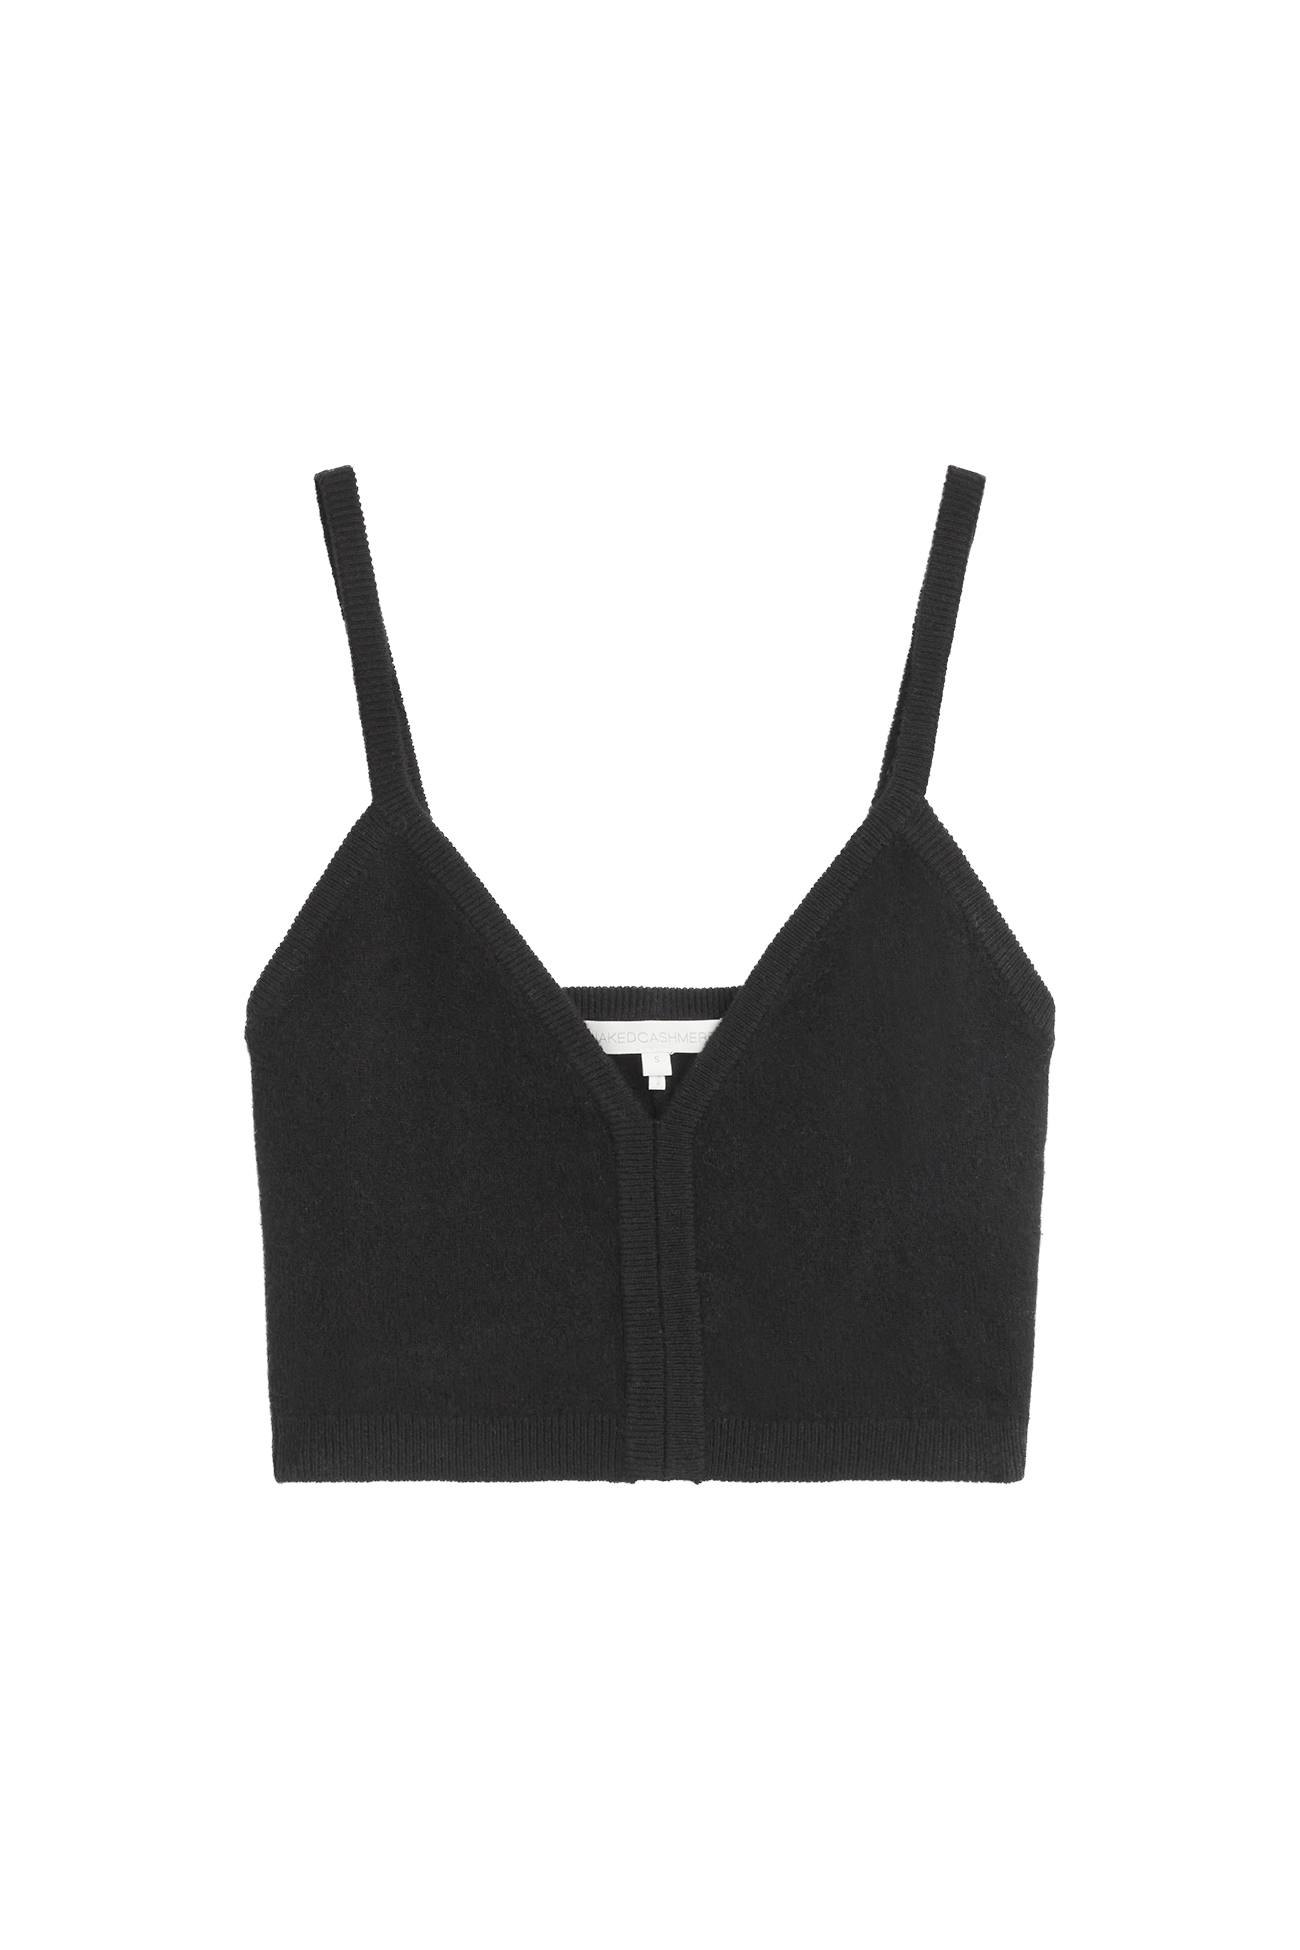 Buy Sonari Cristina Women's T-shirt Bra - Nude (36C) Online